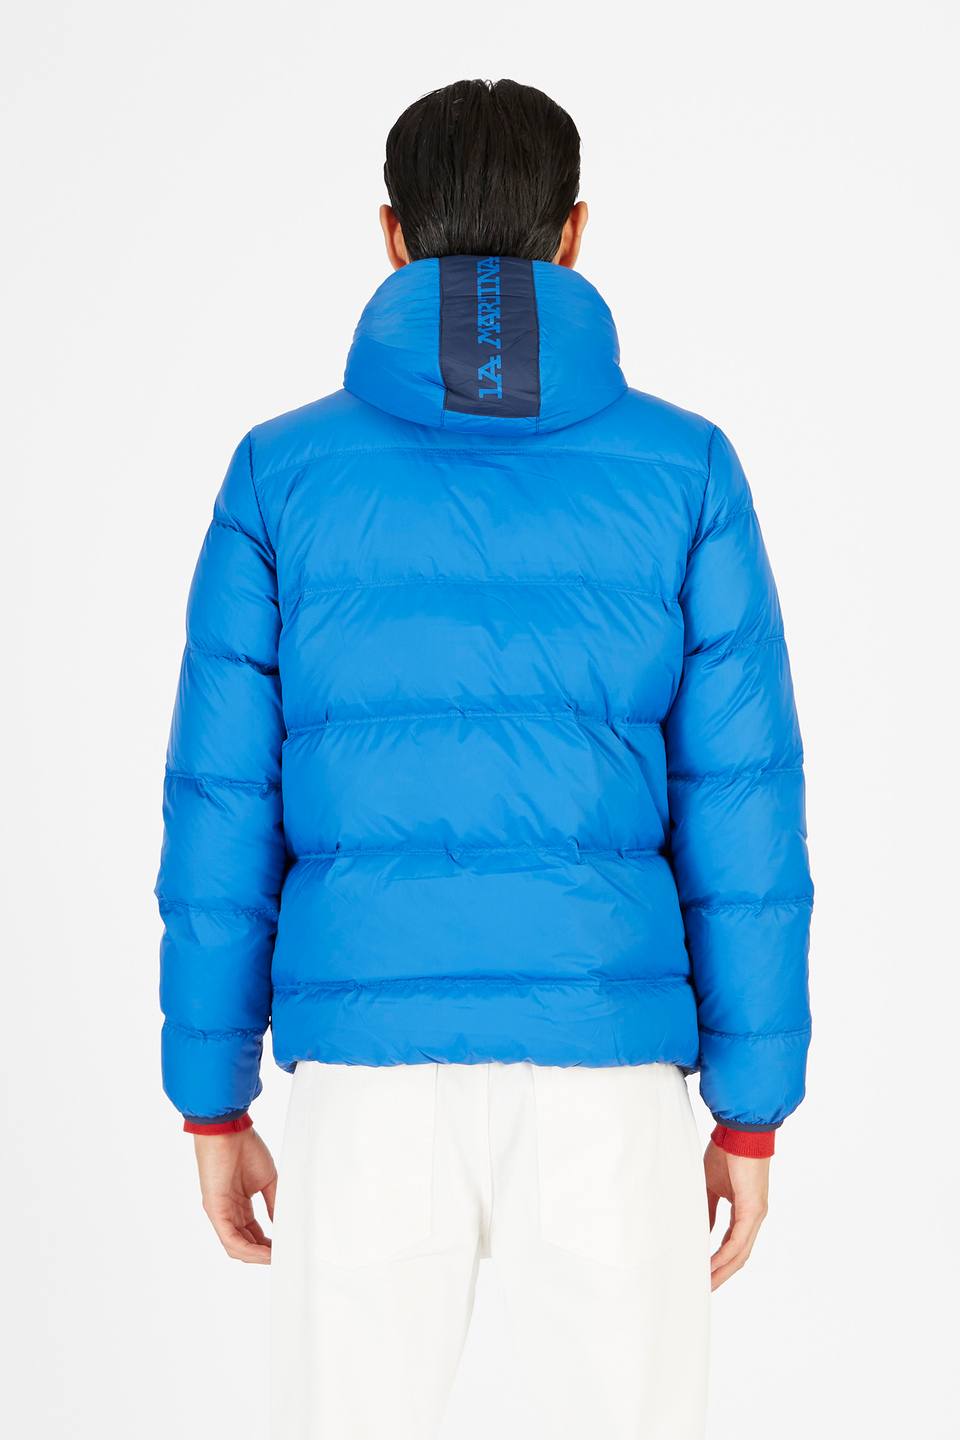 Men’s goose down jacket with regular fit zip closure | La Martina - Official Online Shop